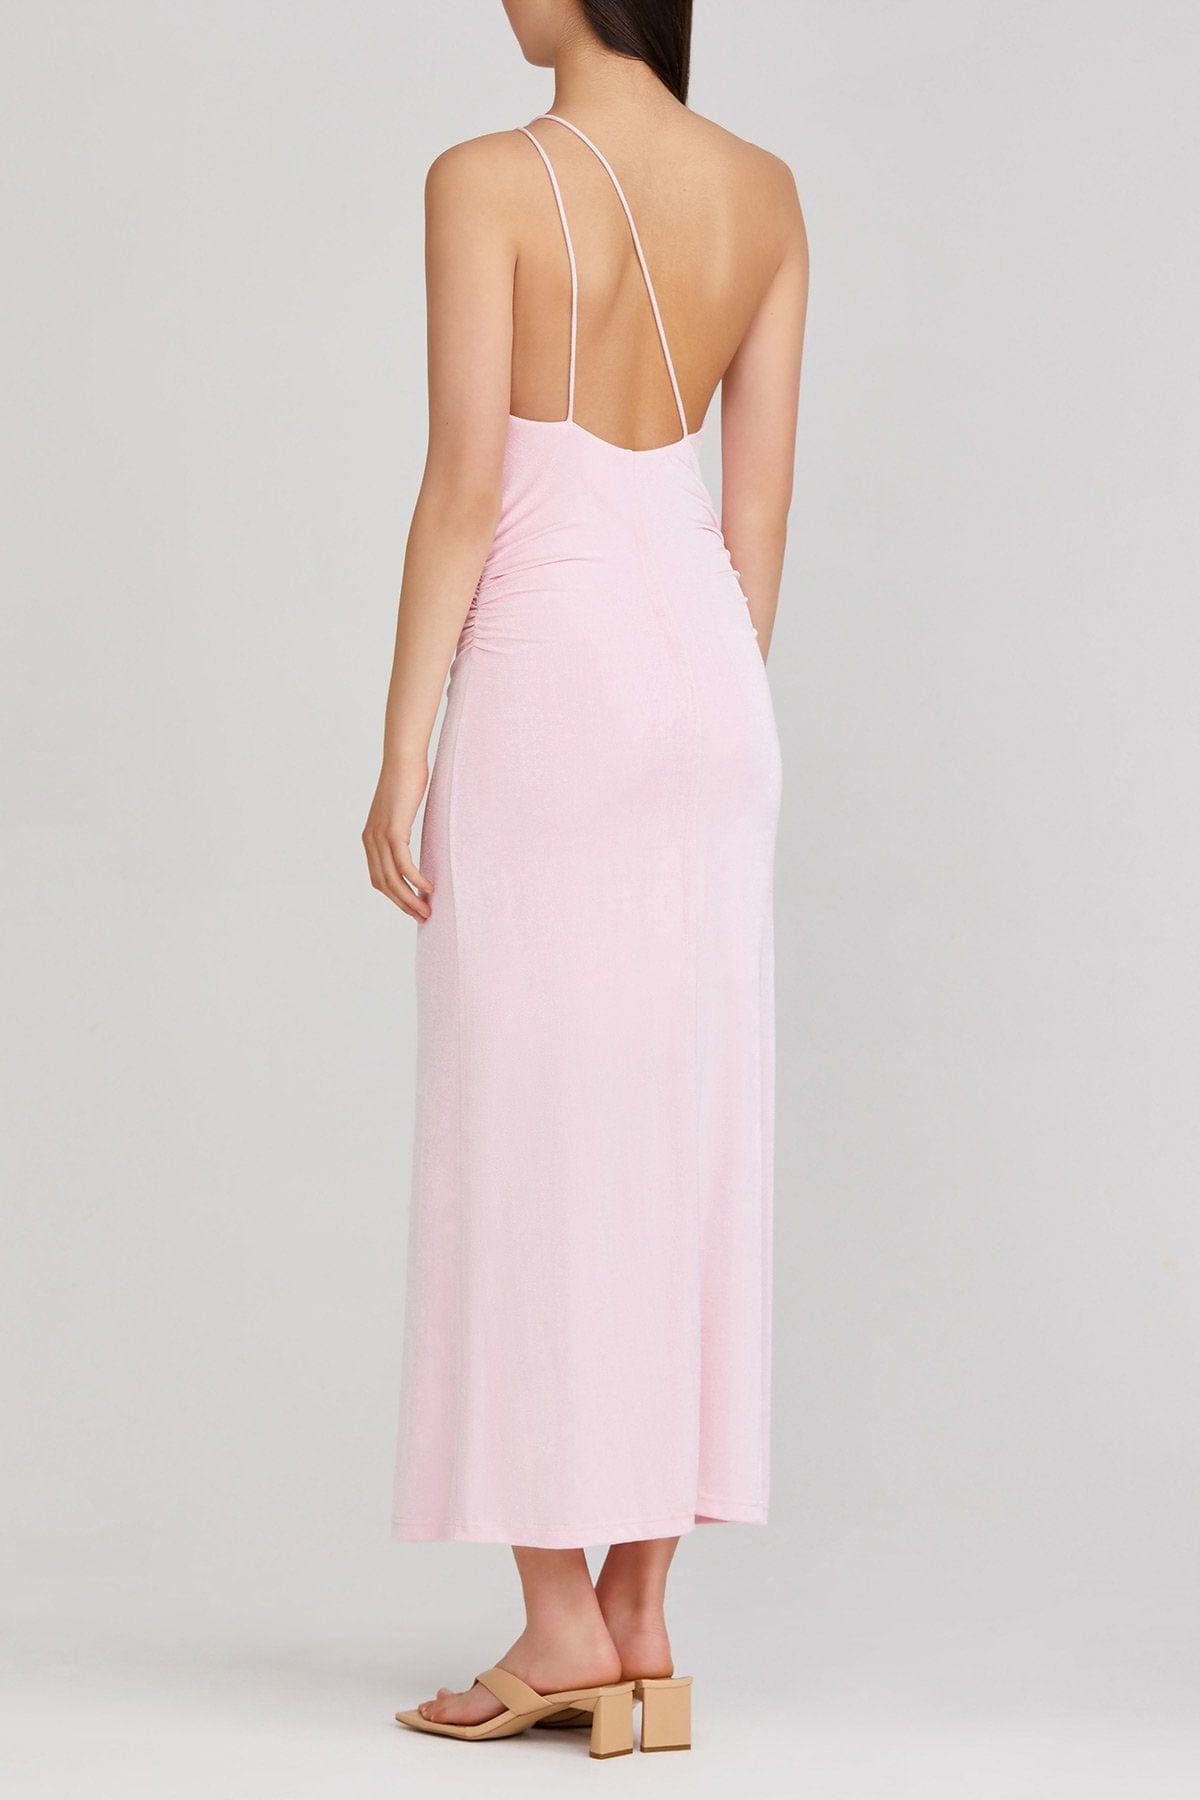 Bella Single Strap Pink Midi Dress